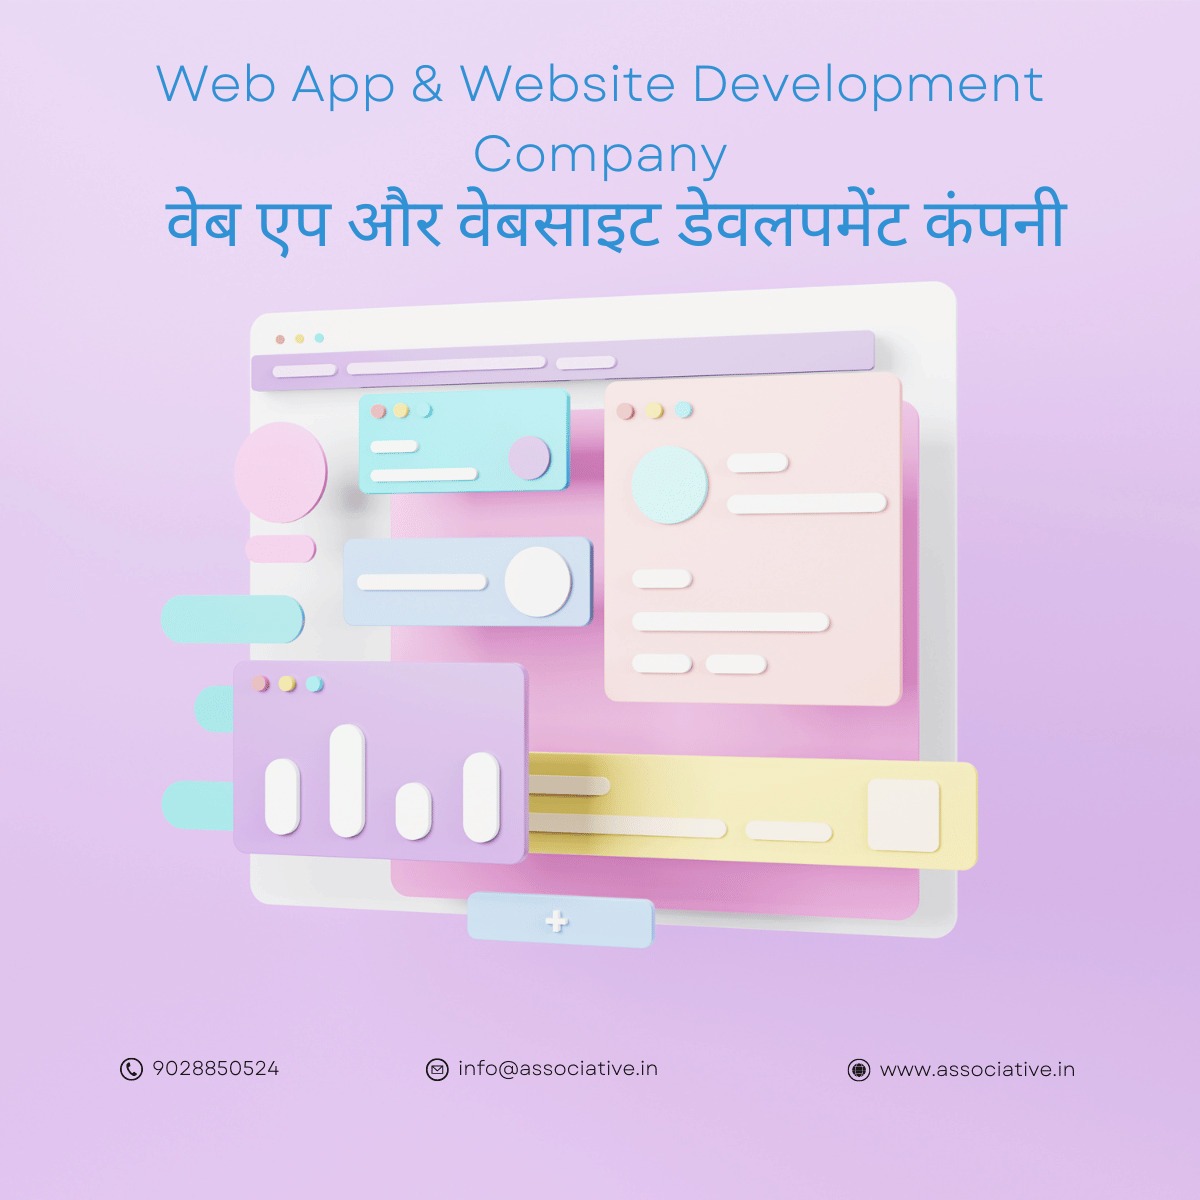 Web App and Website Development Company

वेब एप और वेबसाइट डेवलपमेंट कंपनी